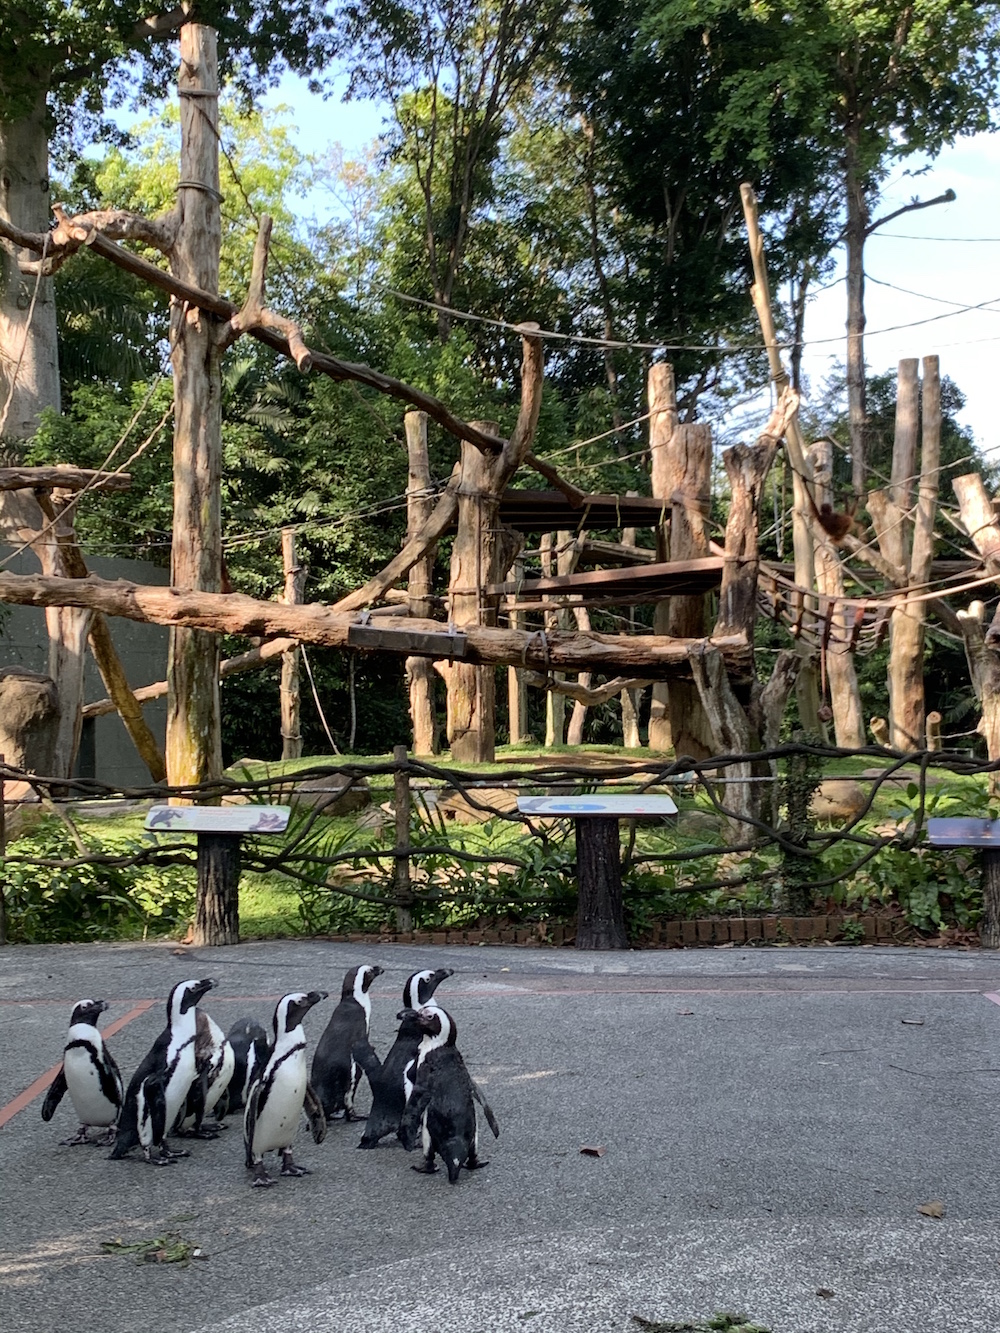 singapore zoo penguins